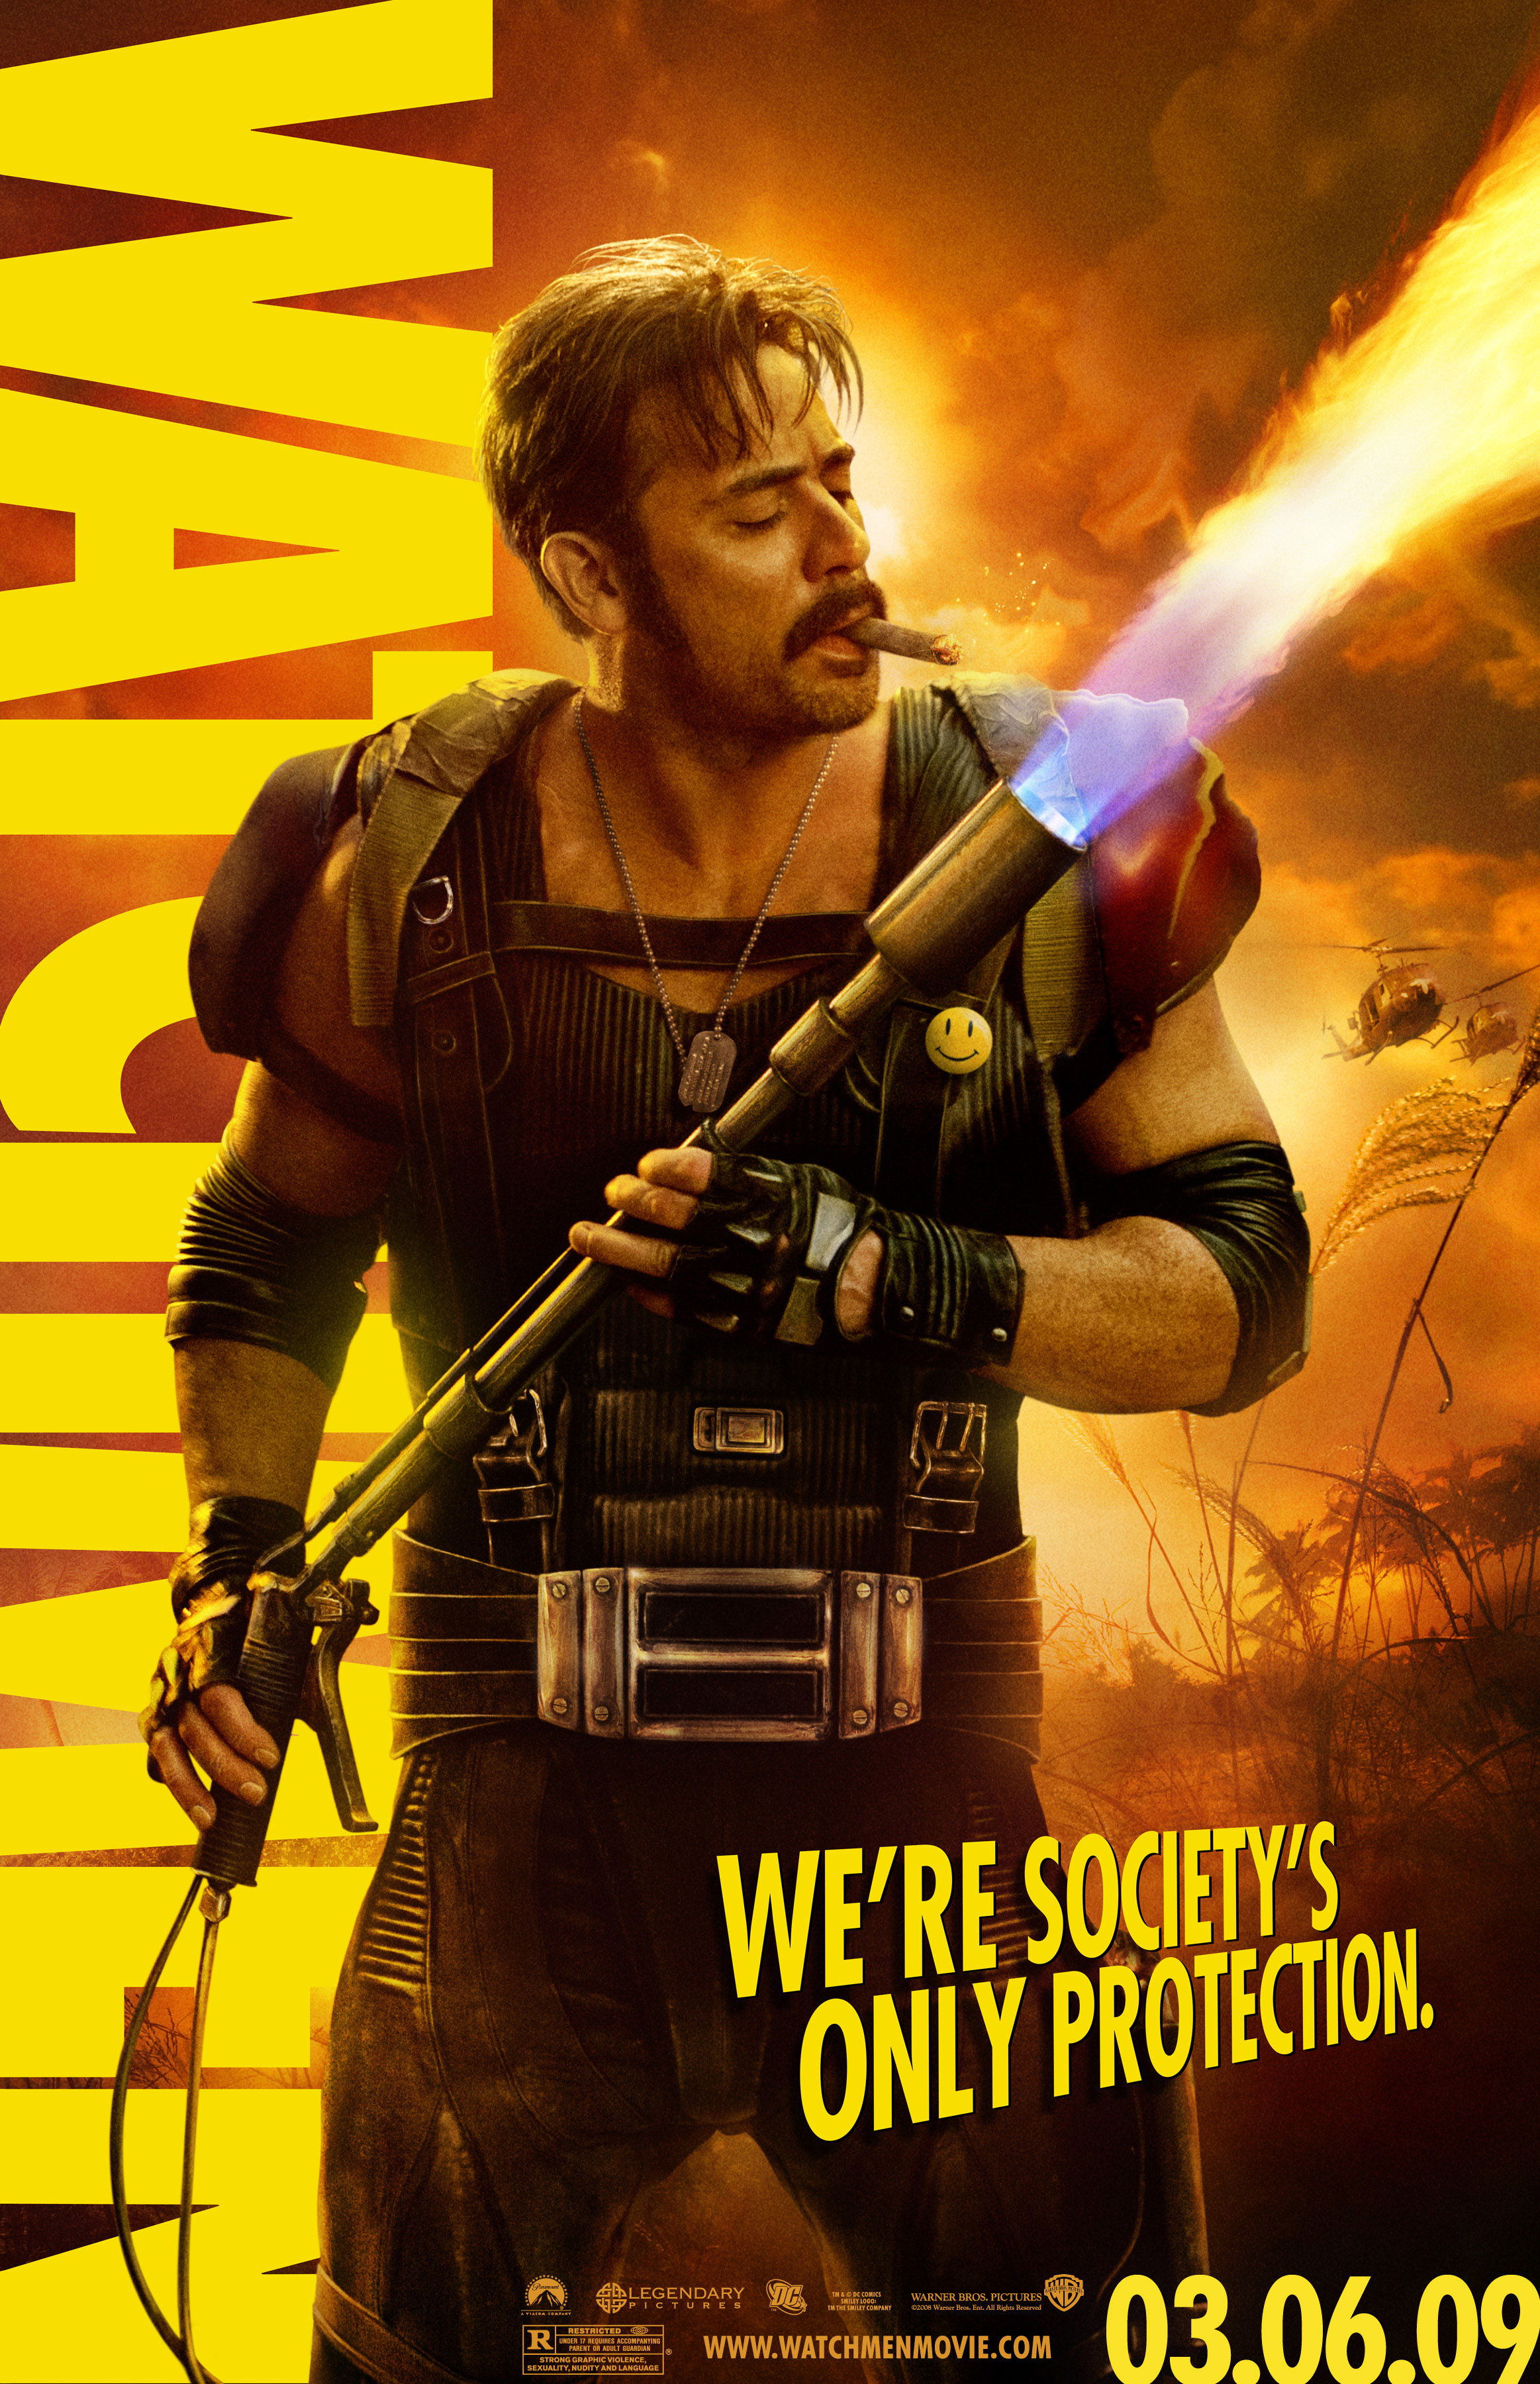 Watchmen, The Comedian, Jeffrey Dean Morgan, movie posters - desktop wallpaper